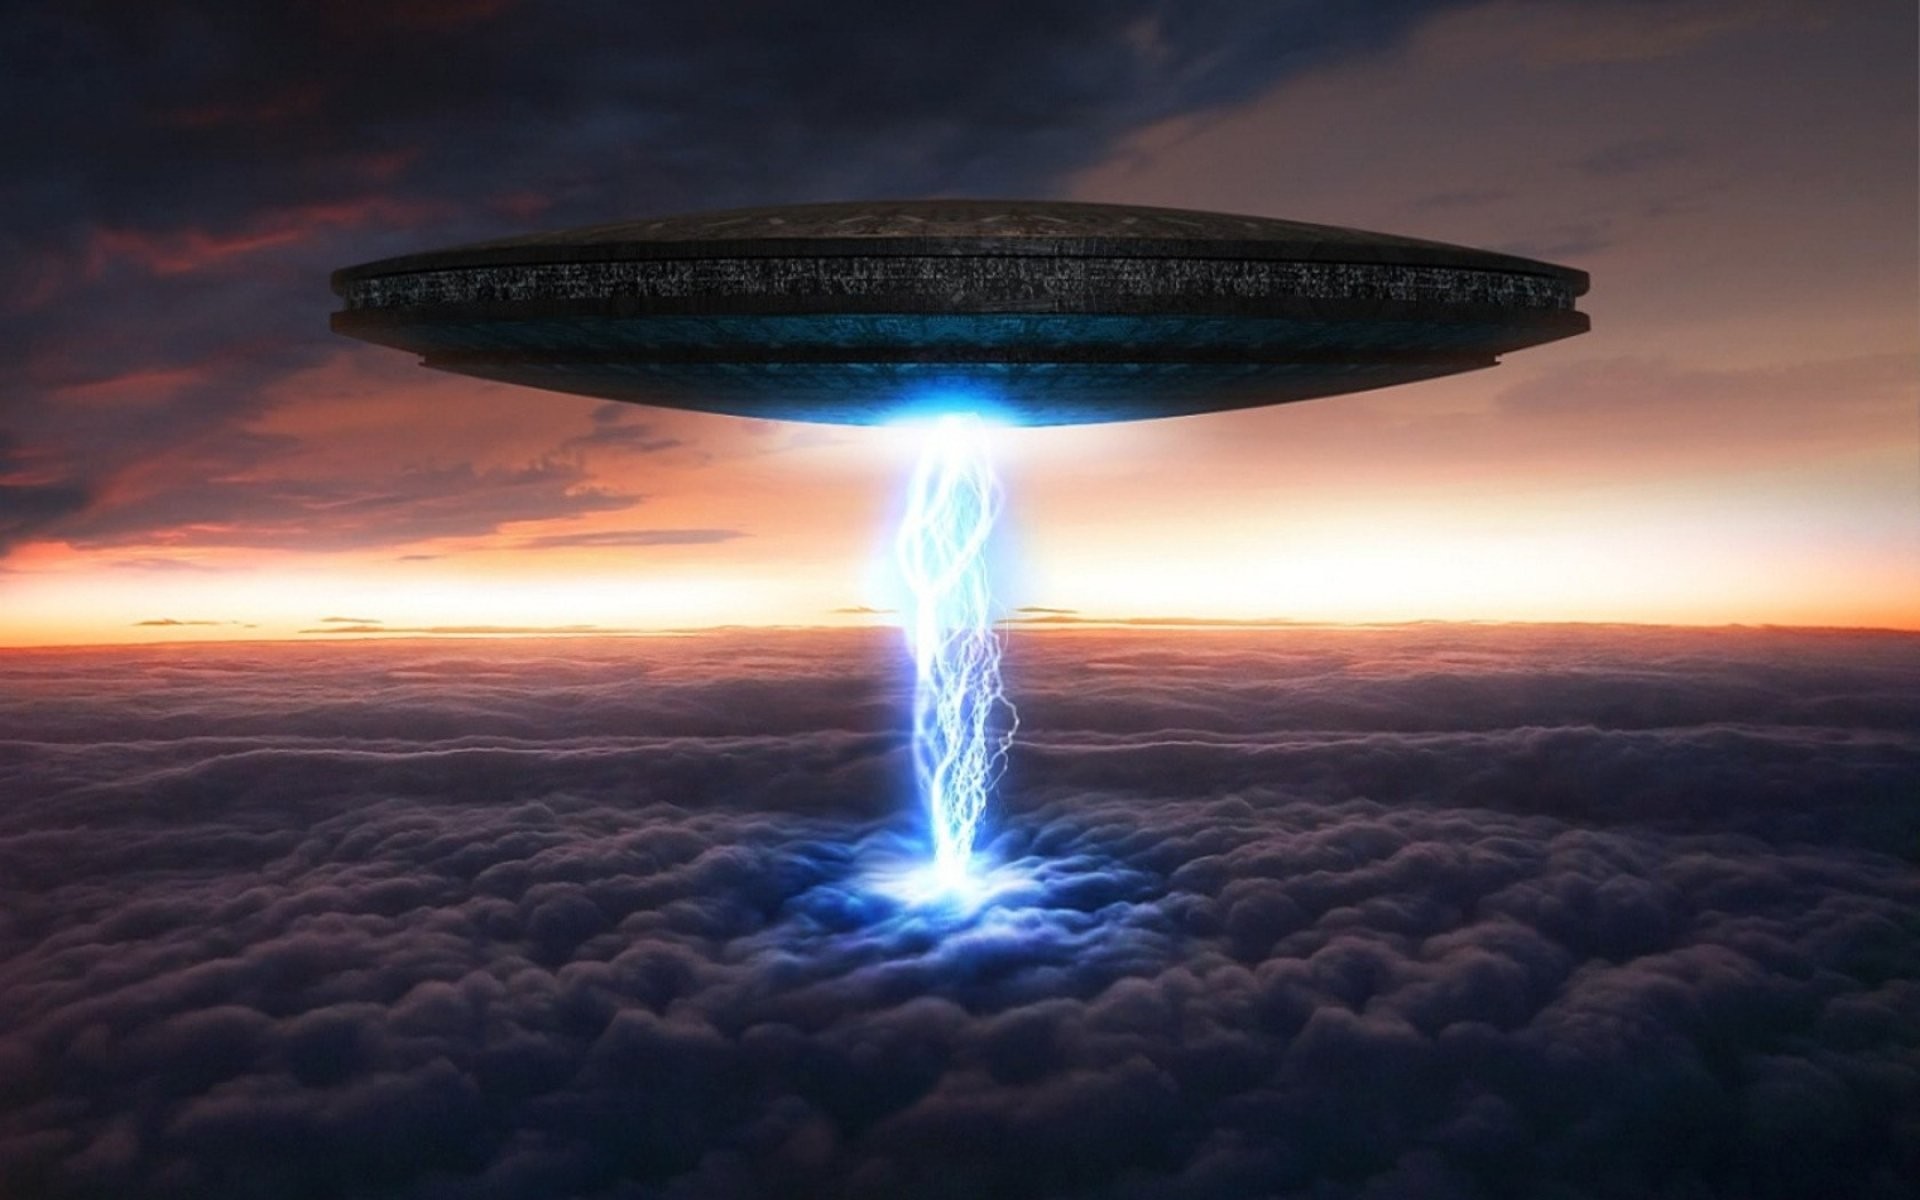 UFO Alien Animated Wallpaper